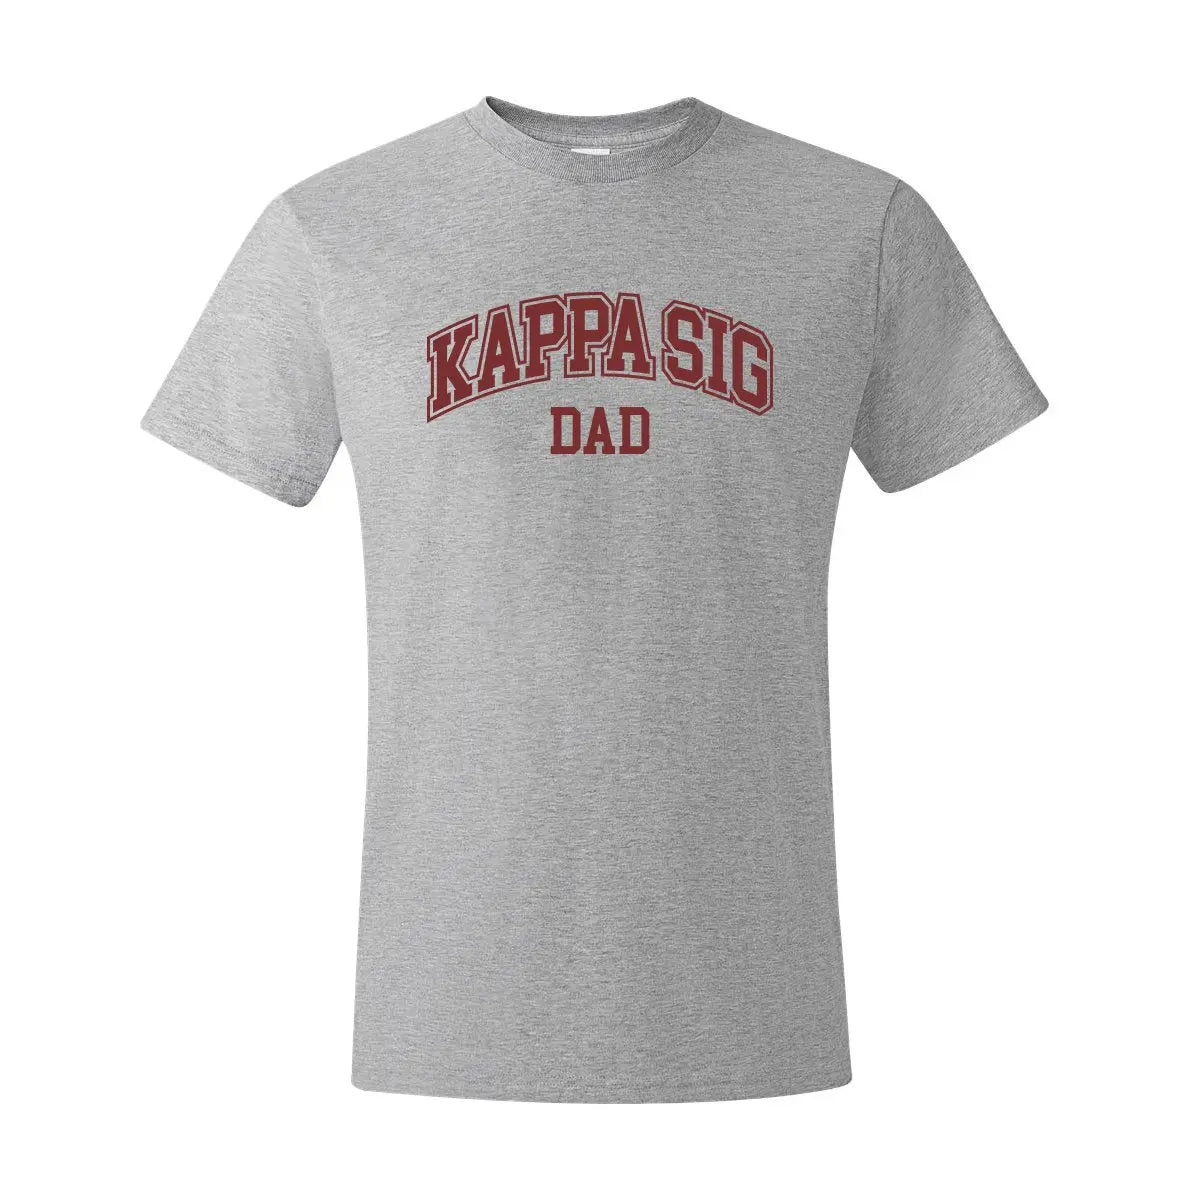 Kappa Sig Heather Gray Dad Tee - Kappa Sigma Official Store